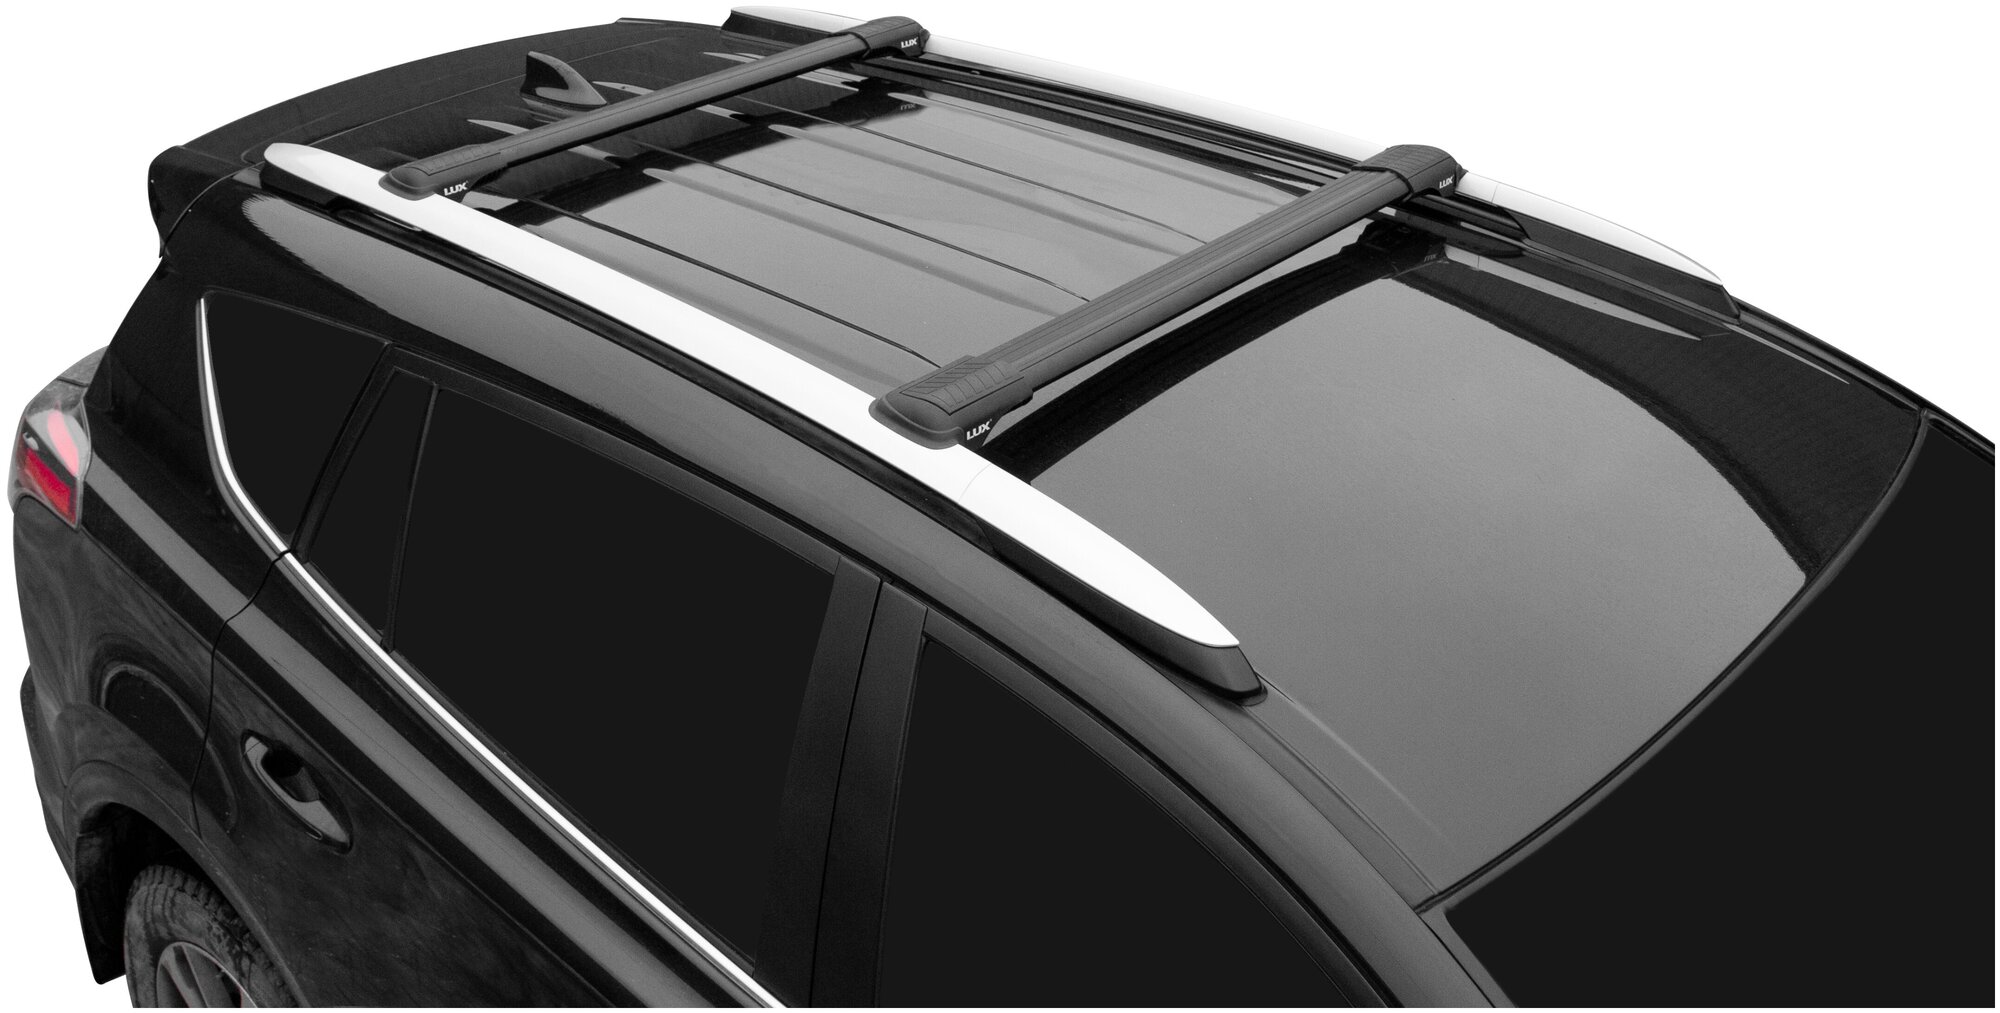 Багажная система LUX хантер L47-B черная для автомобилей с рейлингами (Lux 791897)